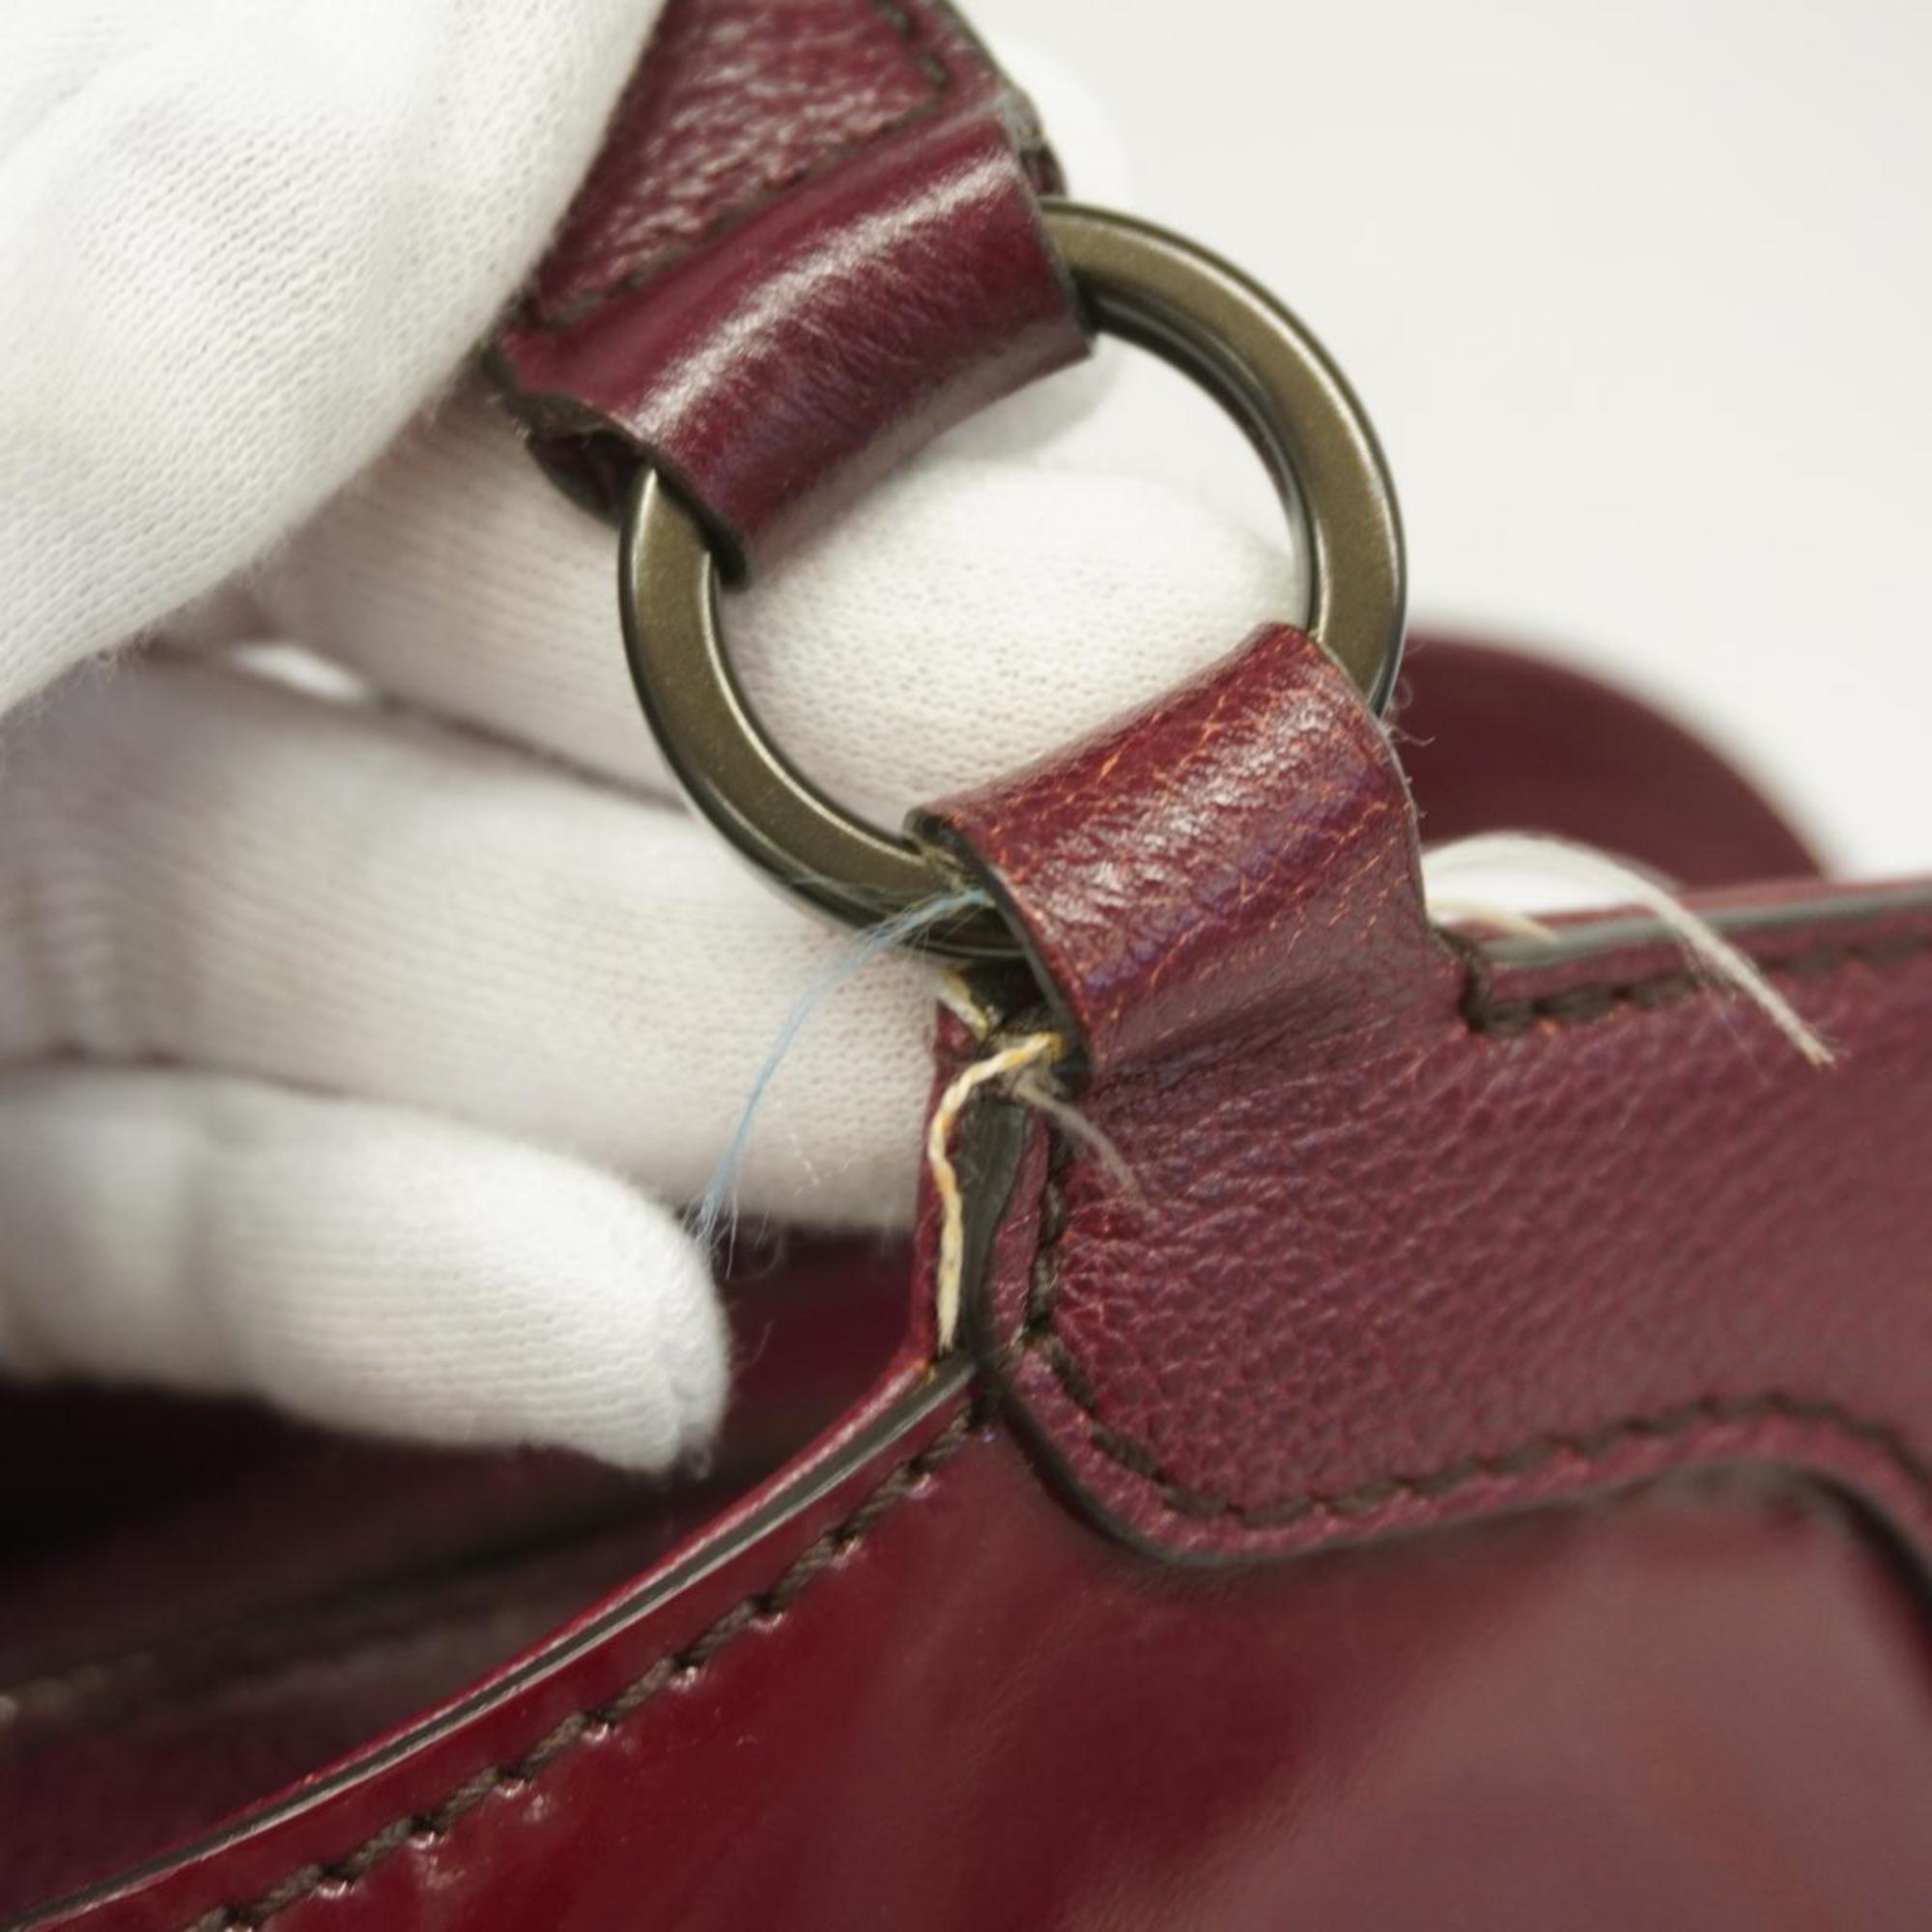 Cartier handbag Marcello leather enamel Bordeaux ladies